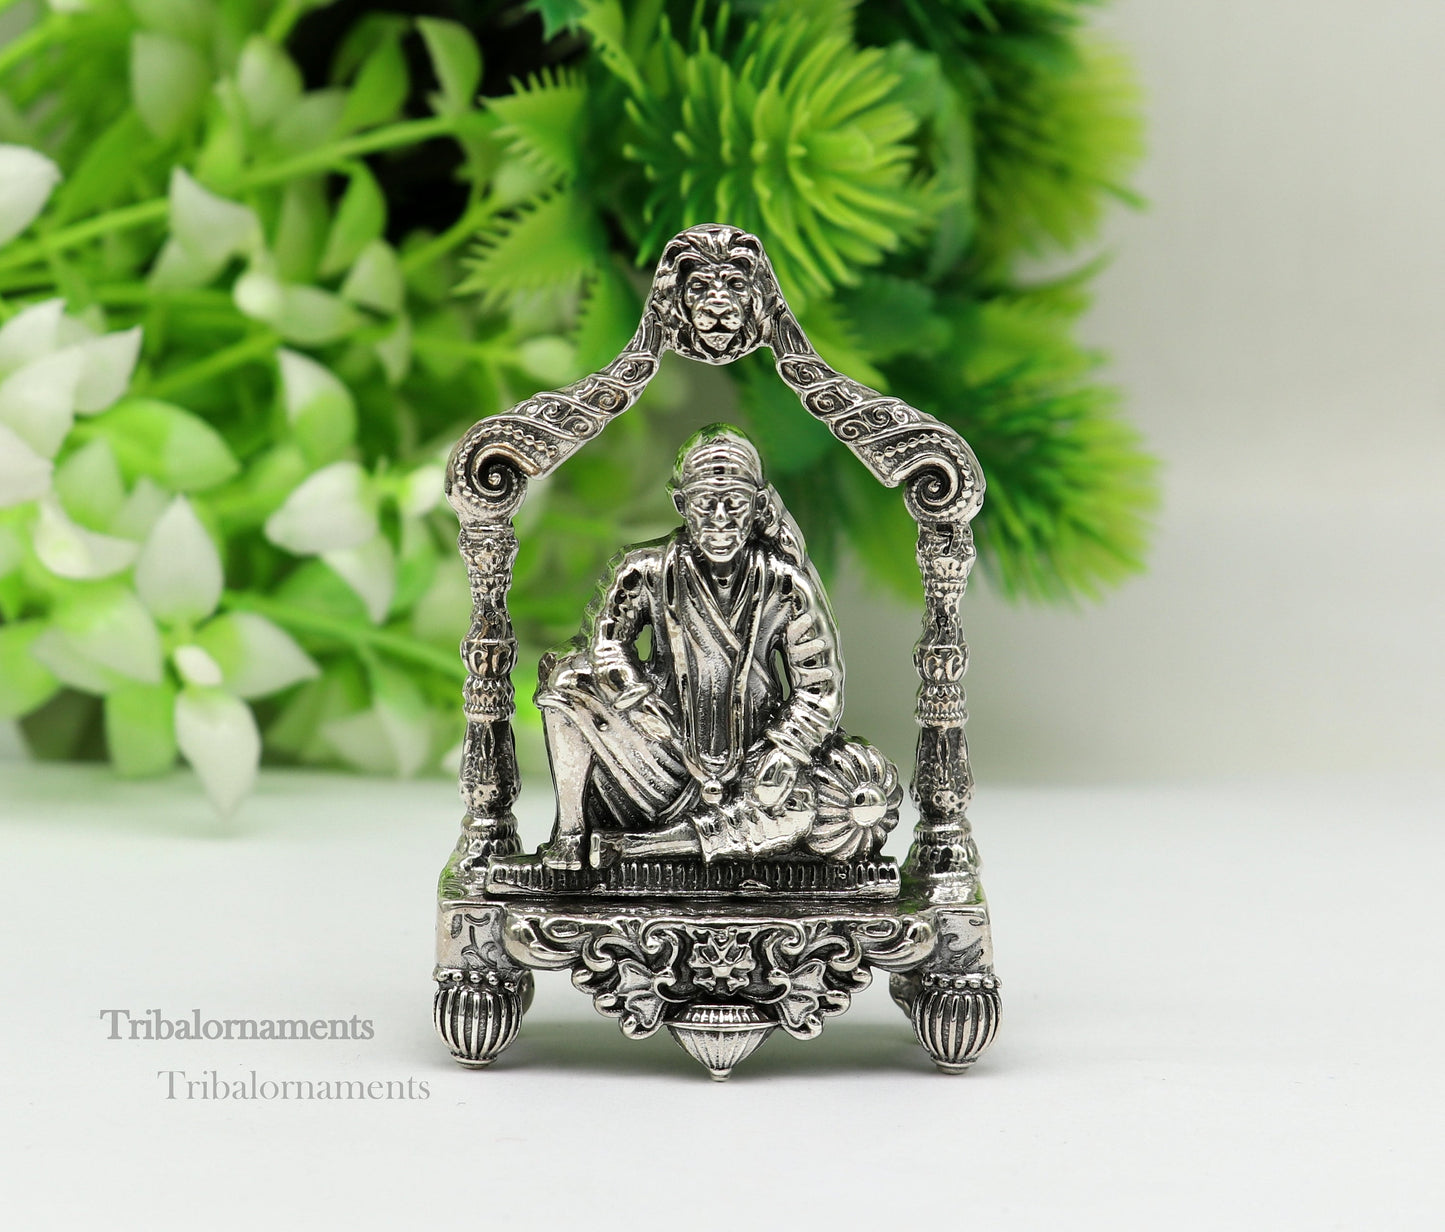 925 sterling silver handmade Divine Hindu idol deity Sai Baba statue murti divine Statue Sculpture figurine puja article gifting art173 - TRIBAL ORNAMENTS